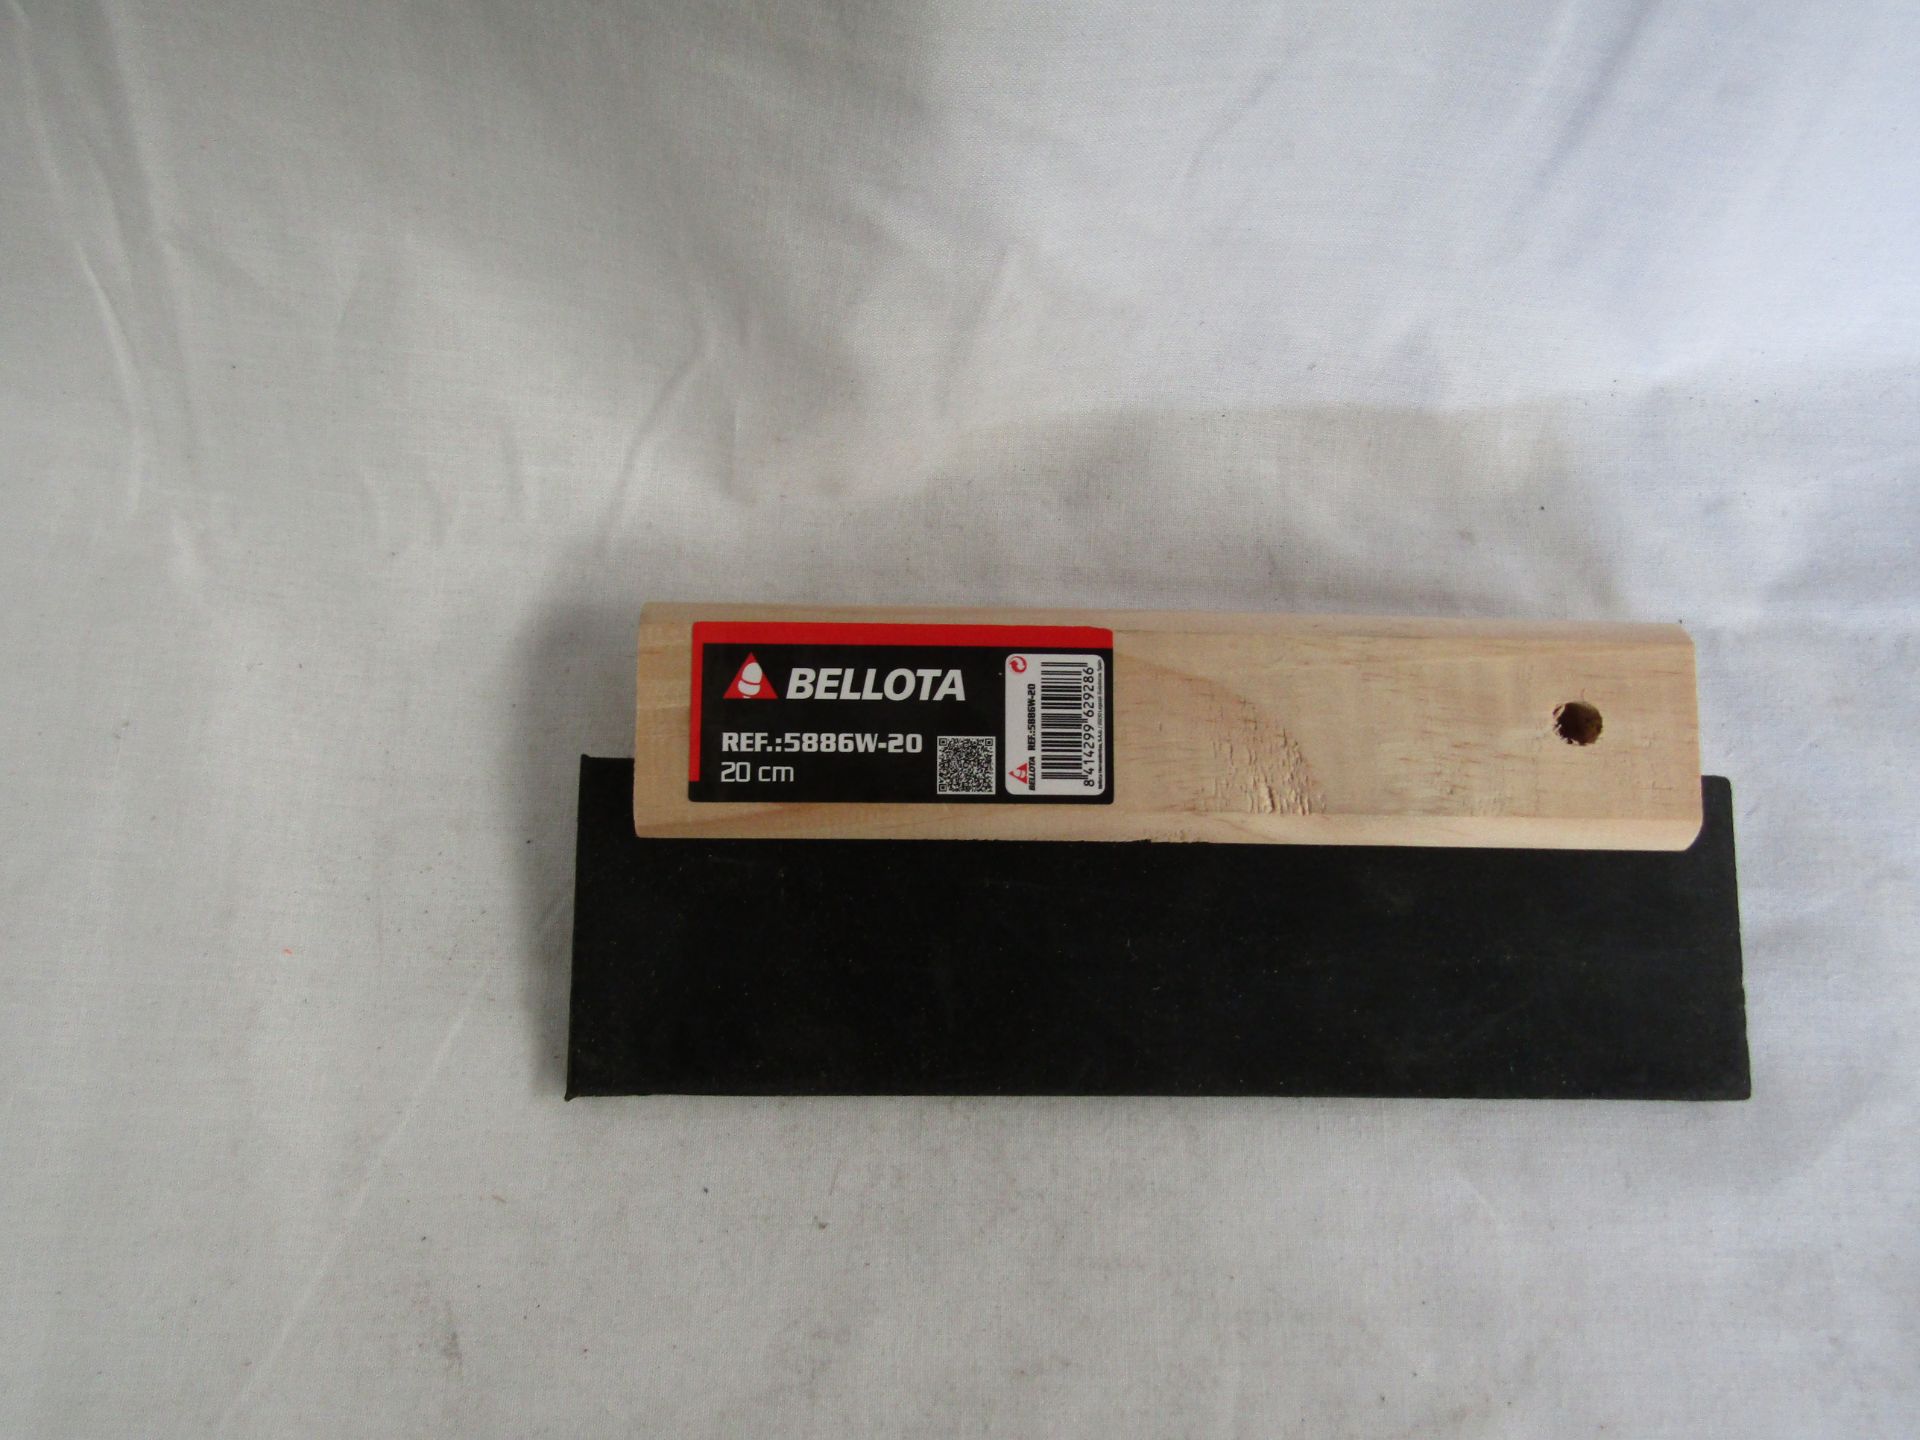 Bellota rubber grout spreader, new